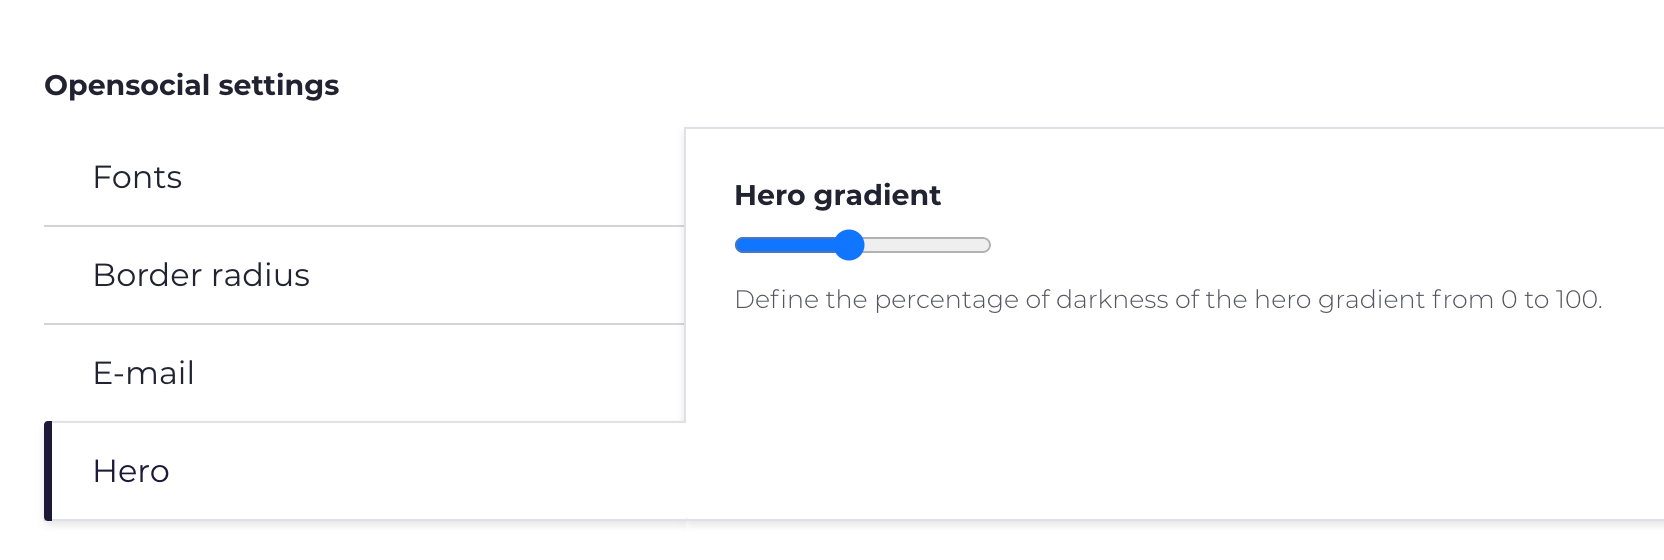 Hero gradient settings